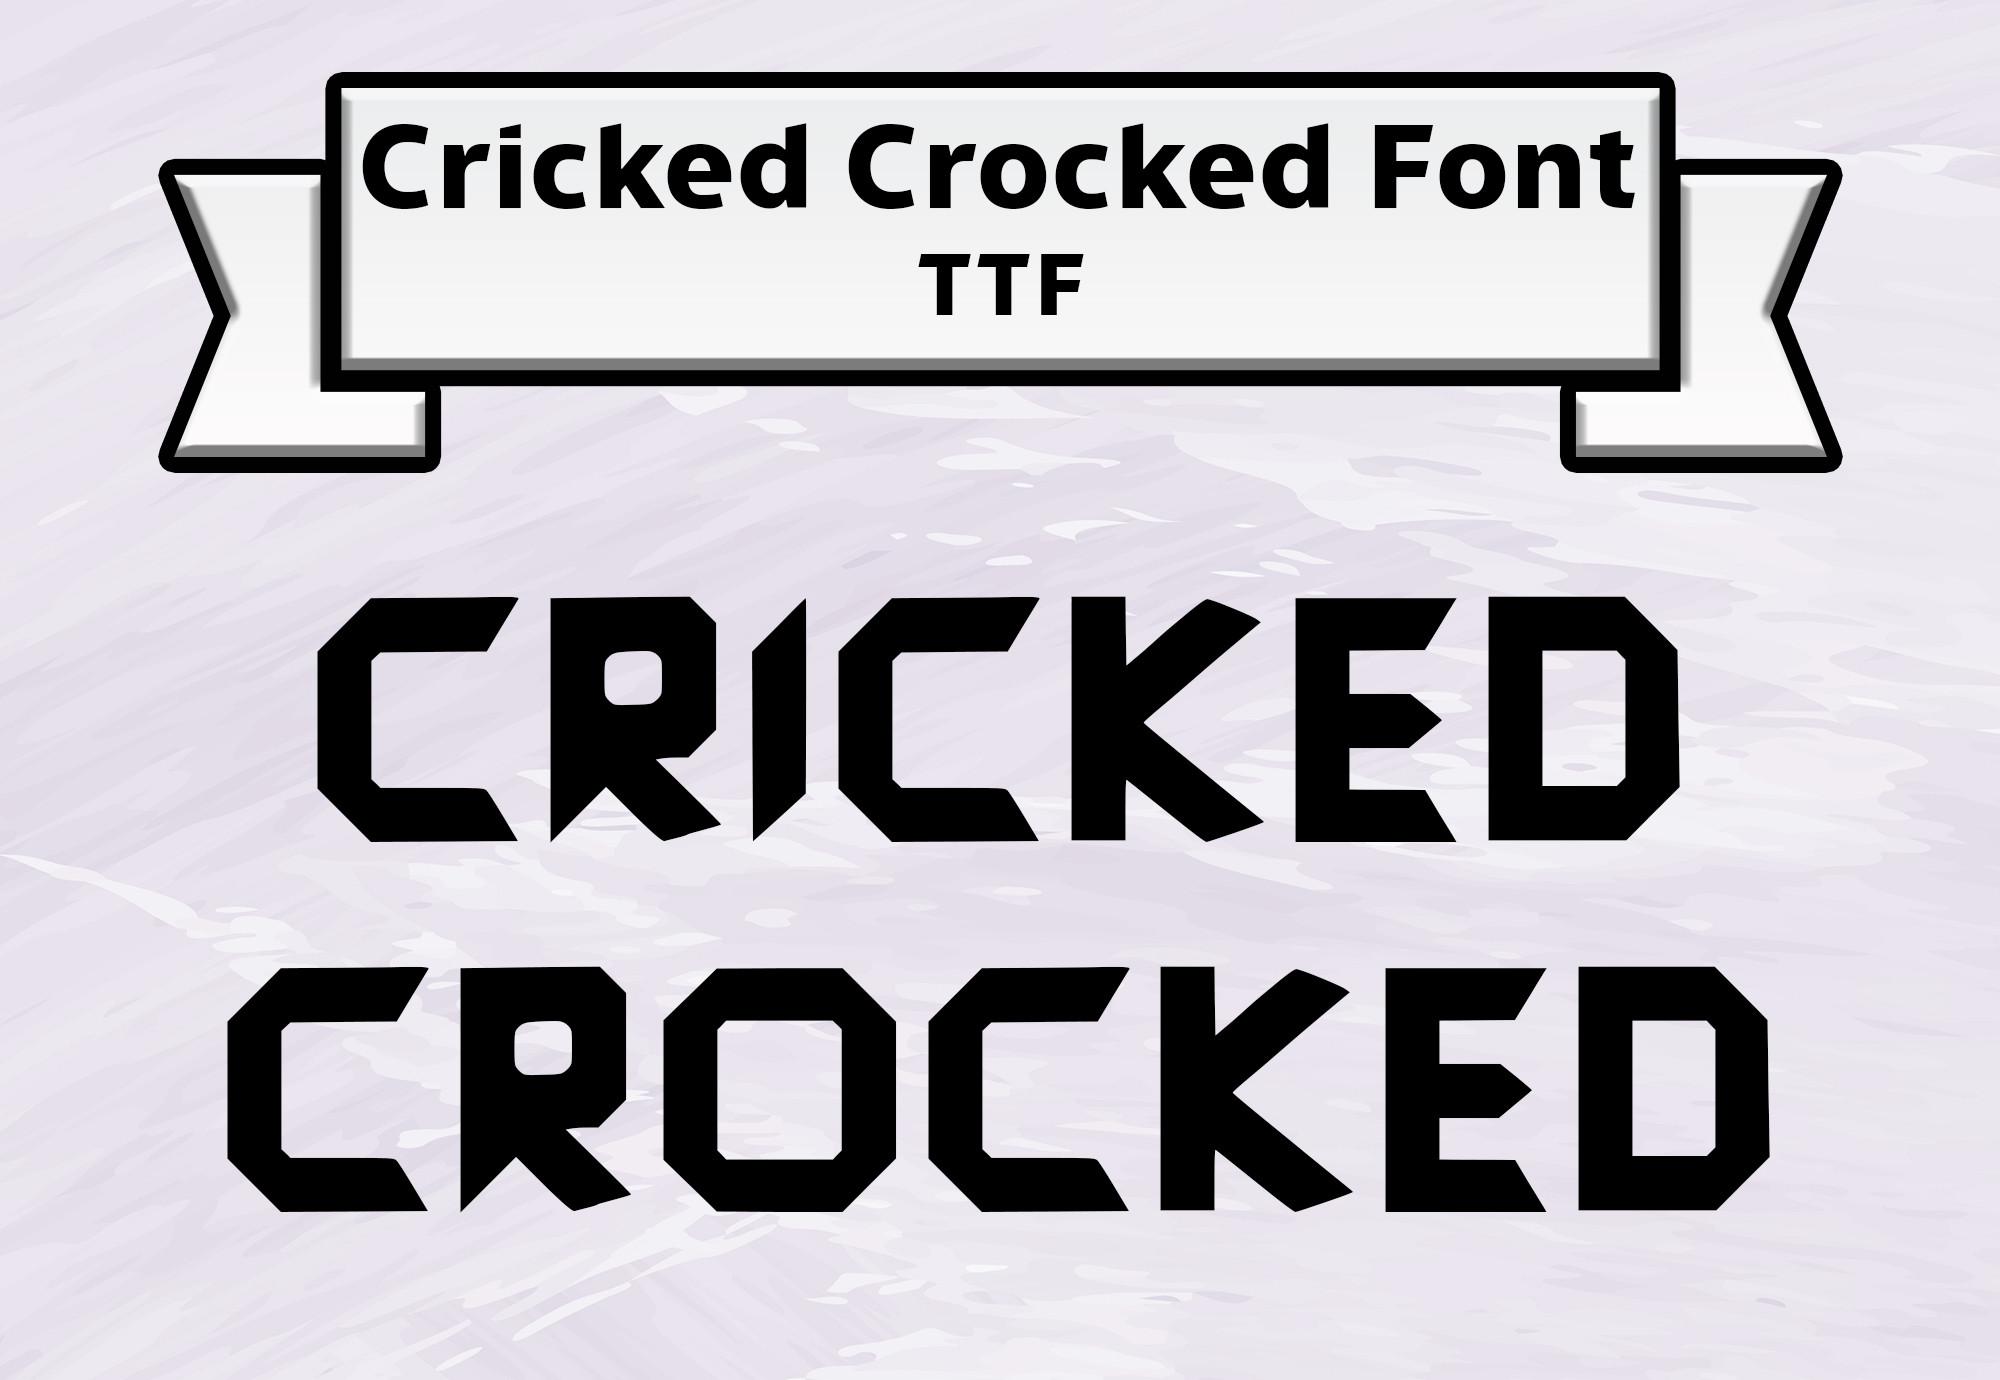 Cricked Crocked Font